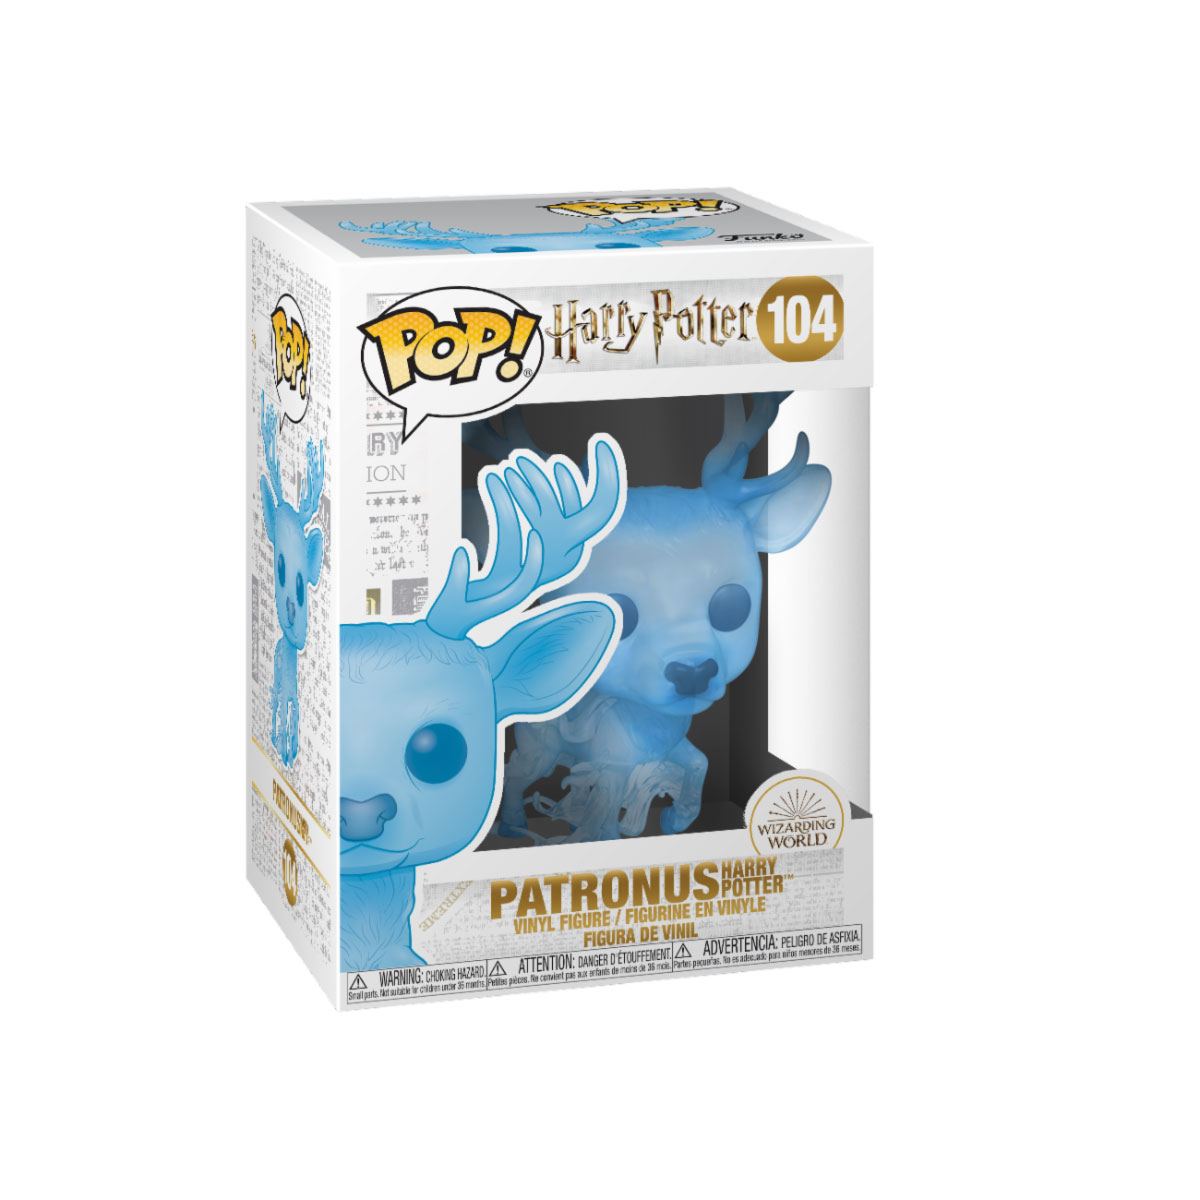 POP! HARRY POTTER #104 PVC PATRONUS HARRY